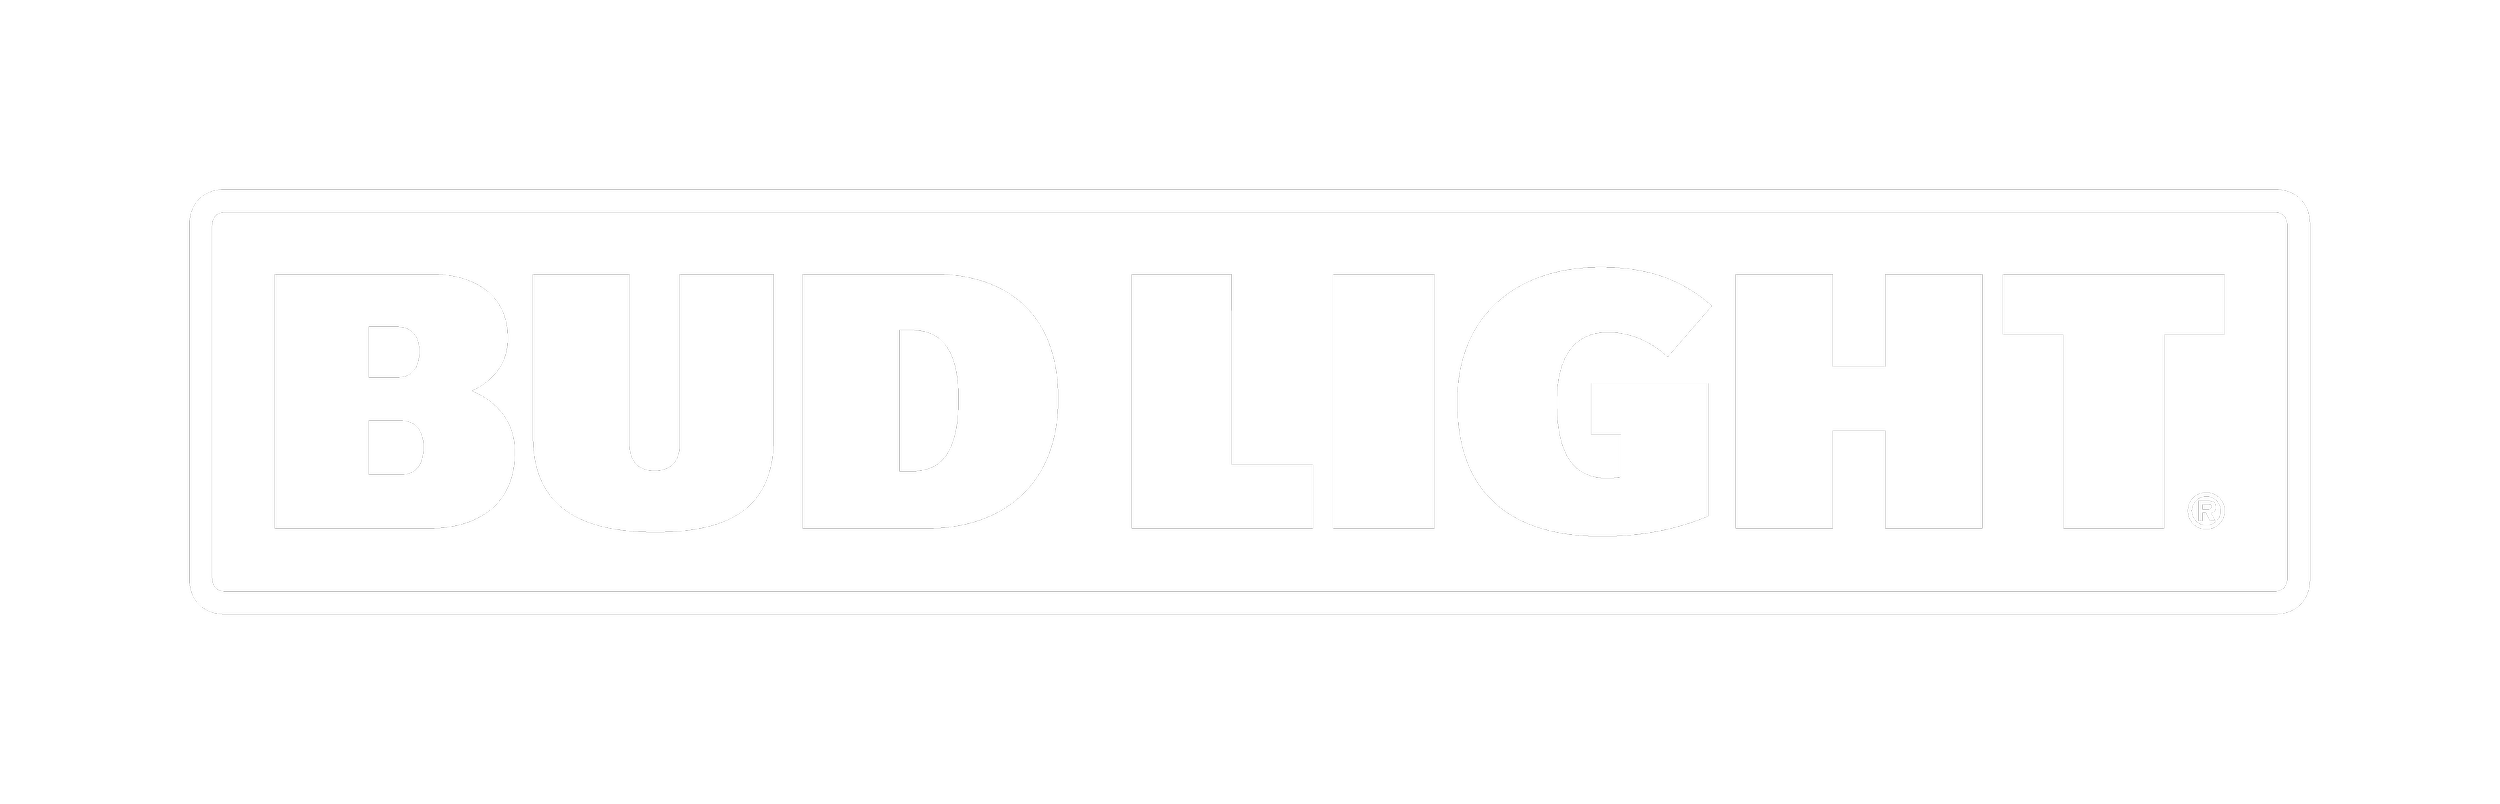 Bud Light RGB Logos Horizontal 1Color - White (1).png